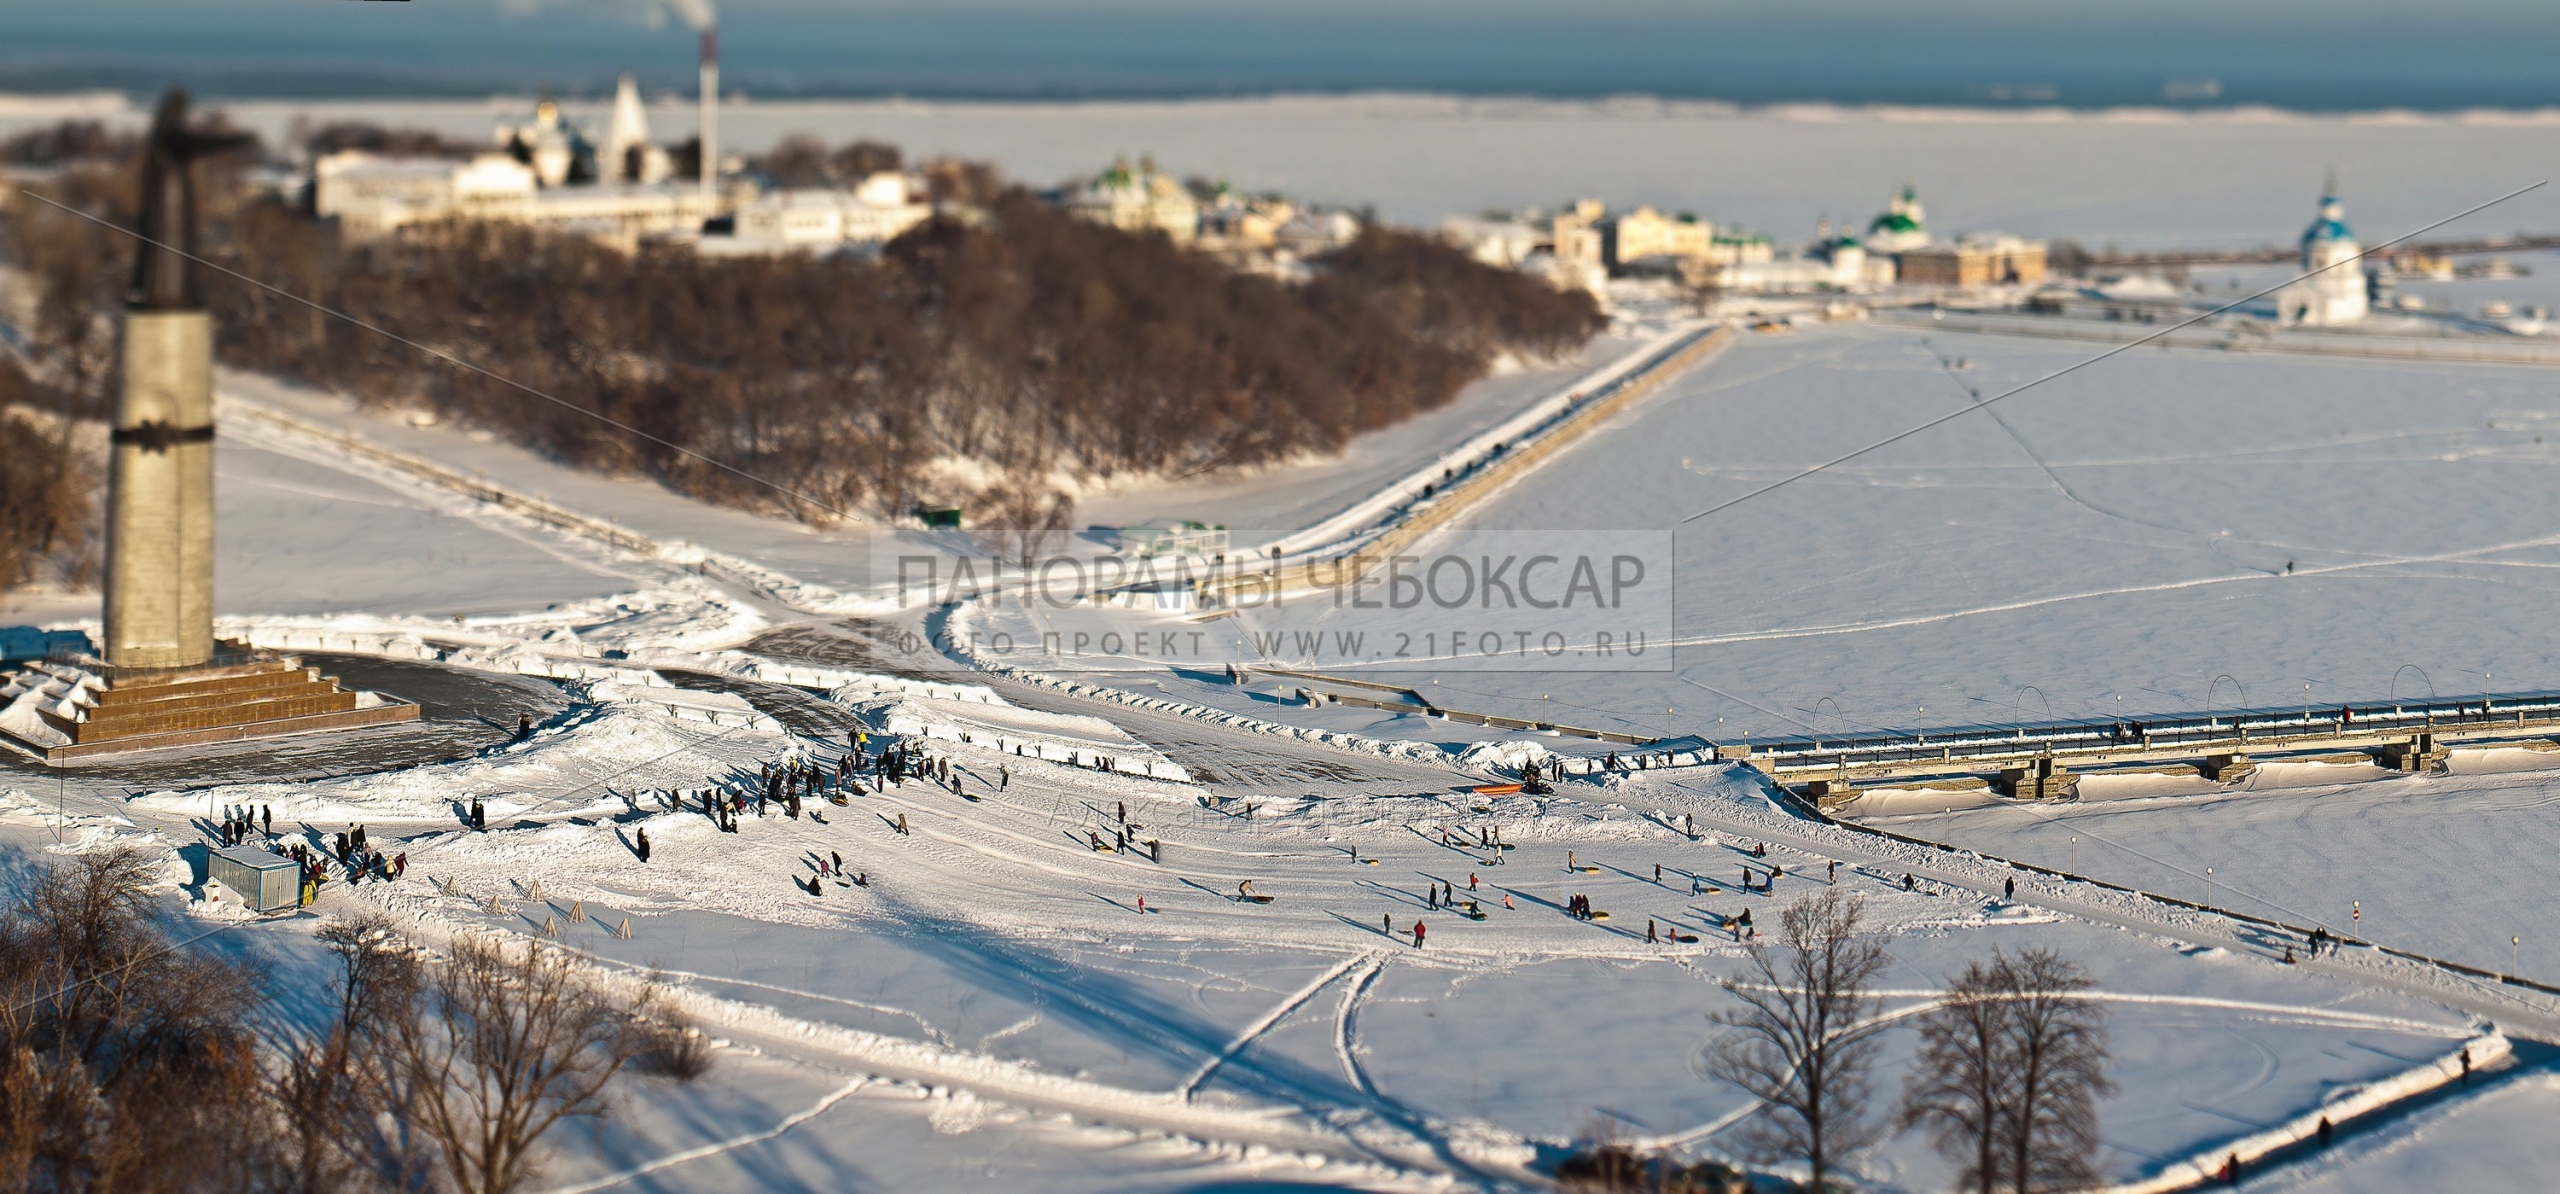 Фото-панорама Чебоксарского Залива Зимой, вид на постамент Матери